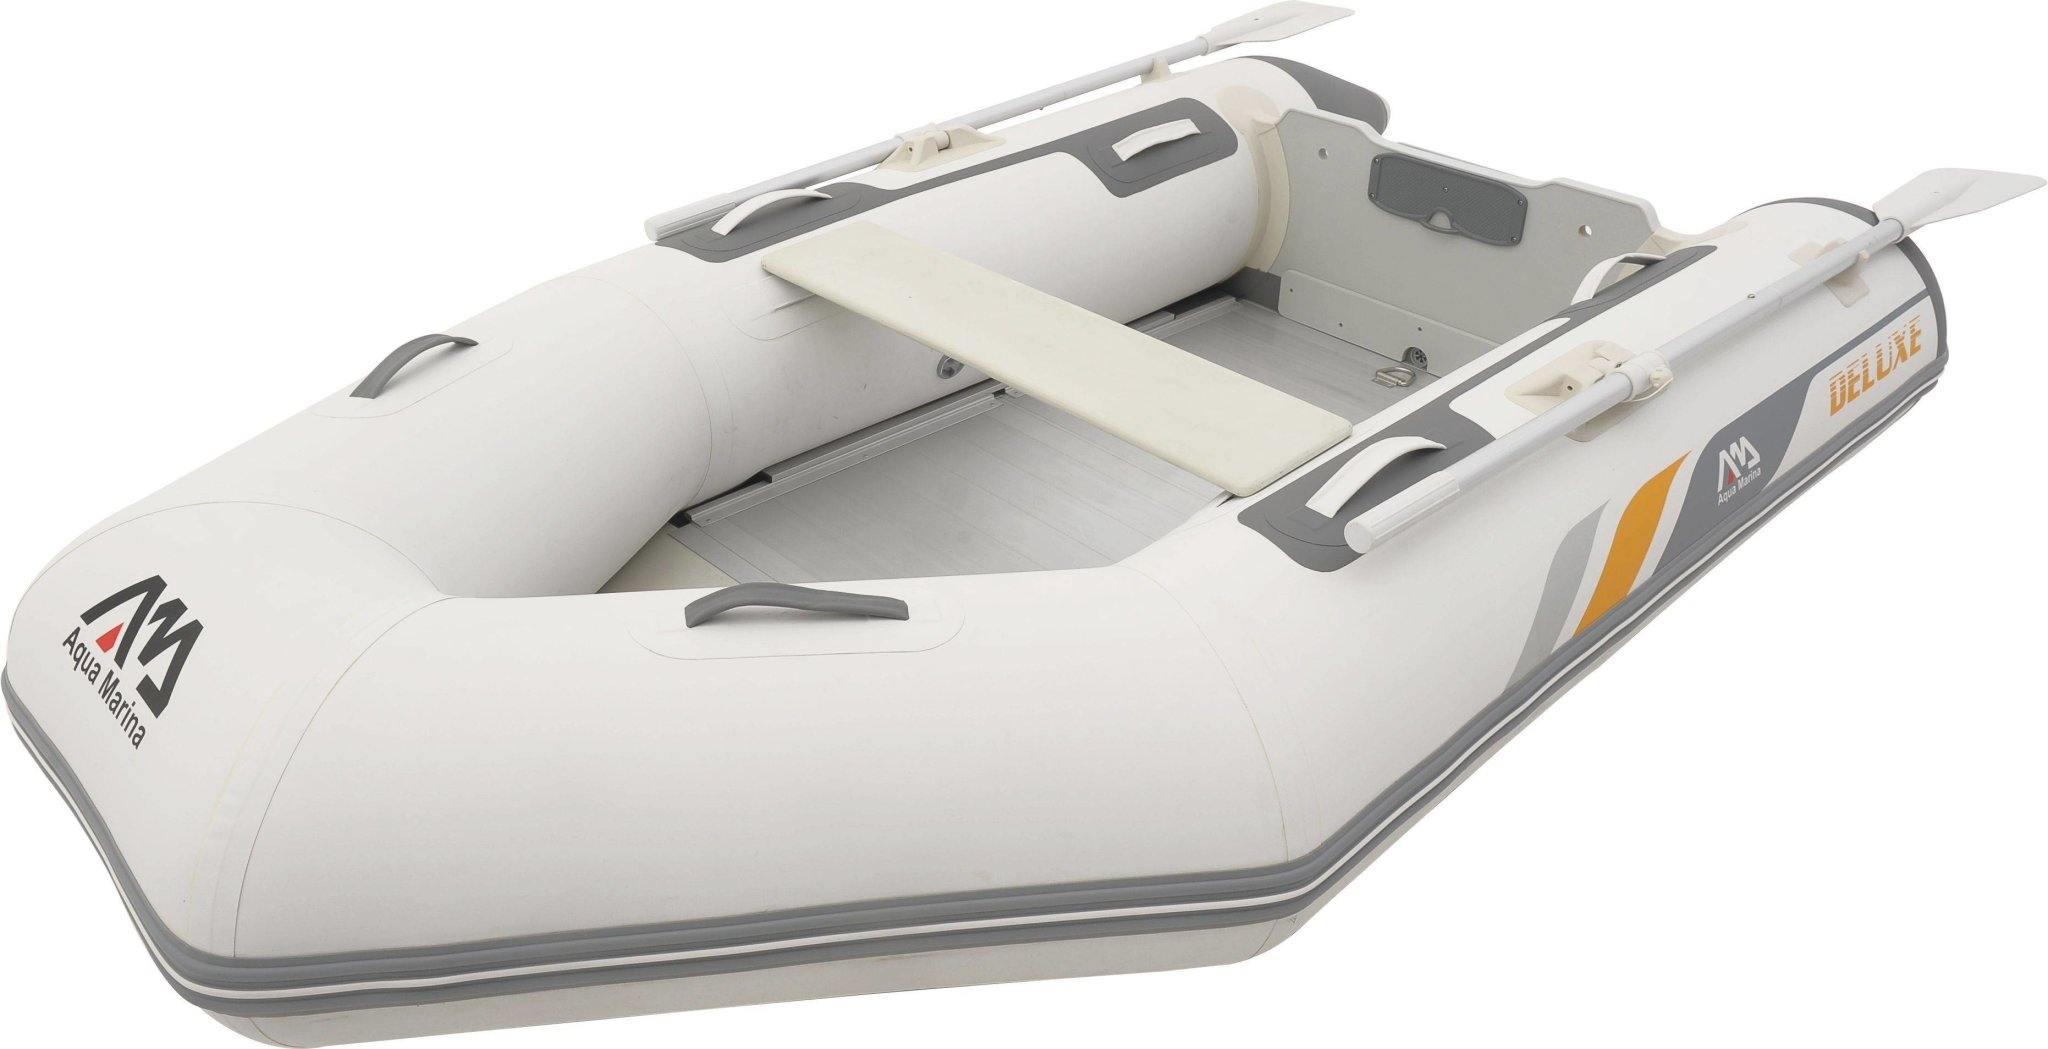 Aqua Marina Deluxe Inflatable Speed Boat - Dti Direct USA